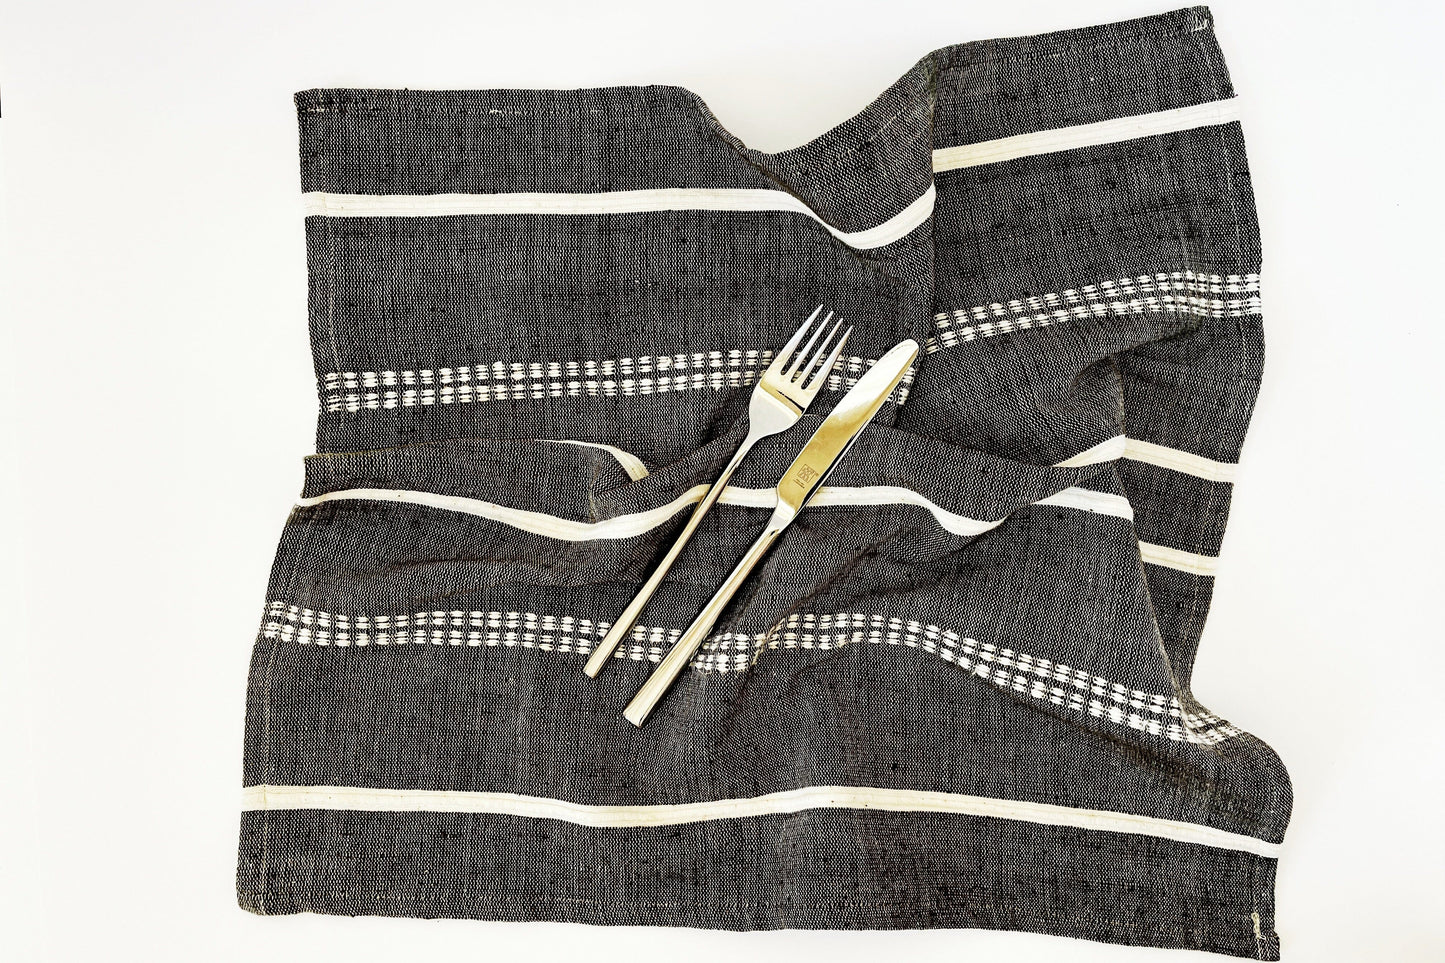 Zinach handwoven Ethiopian cotton napkin napkin sabahar 